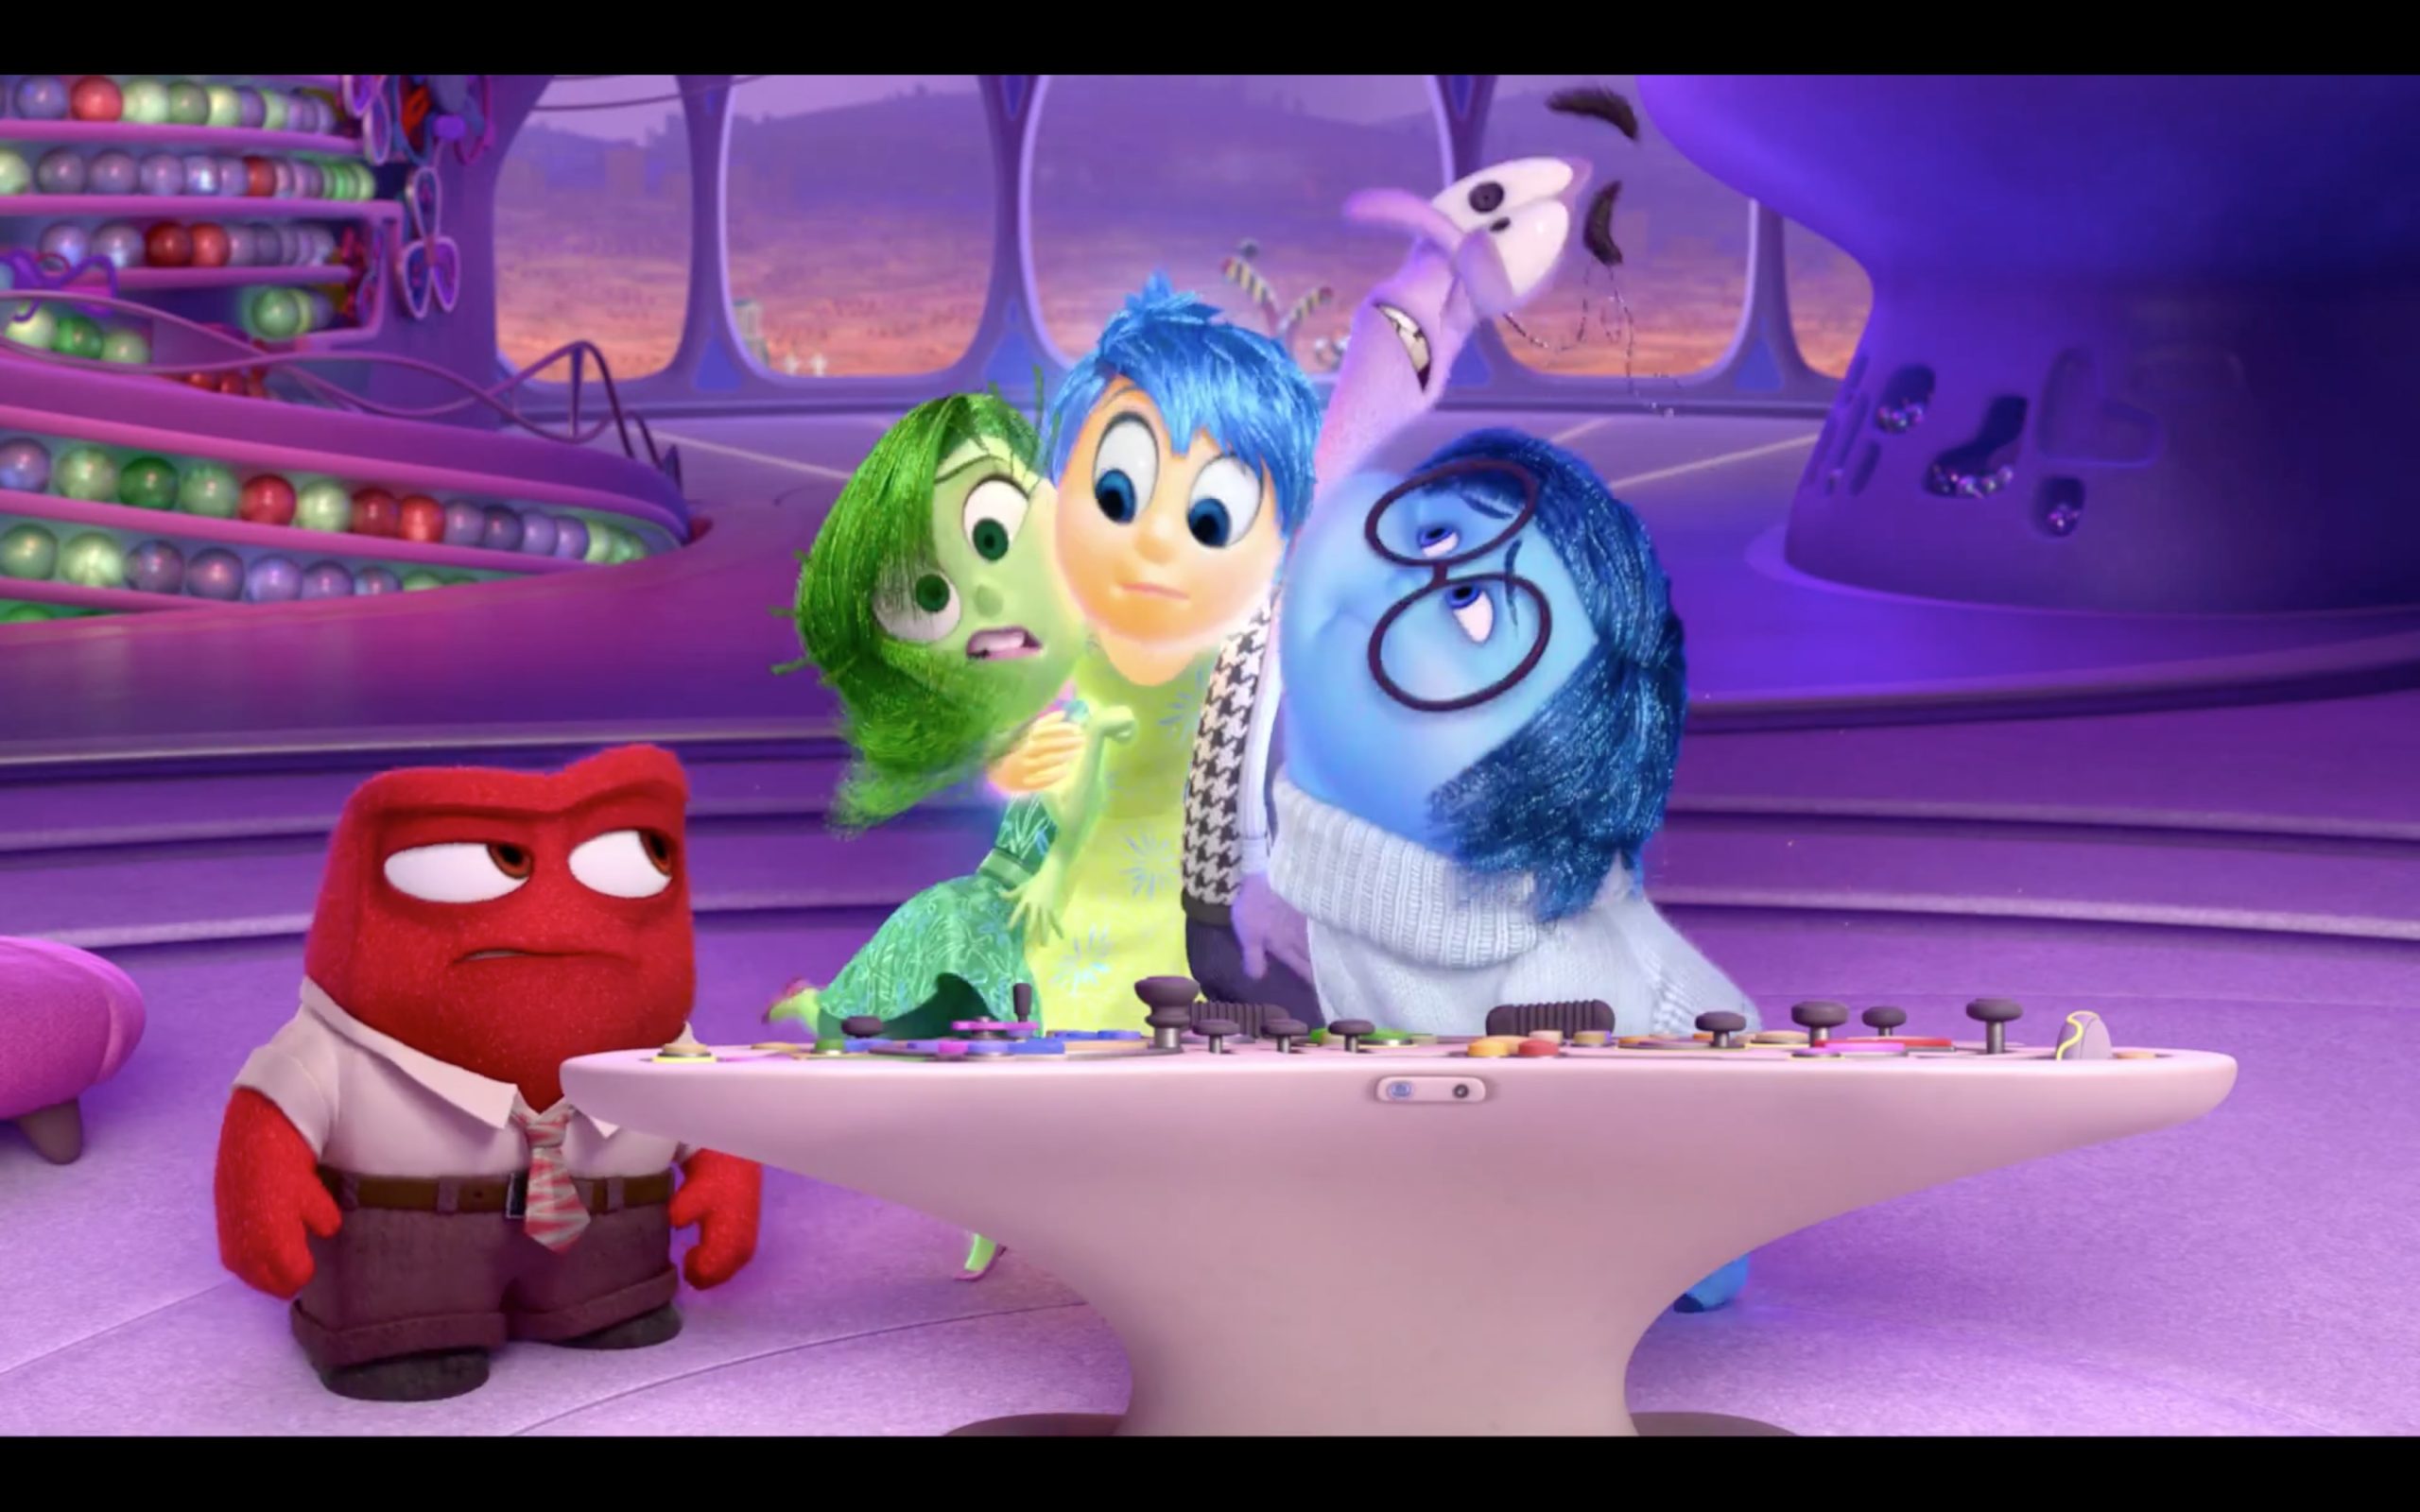 http://www.everythingaction.com/wp-content/uploads/2014/10/Pixar-Inside-Out-Trailer-2.jpg